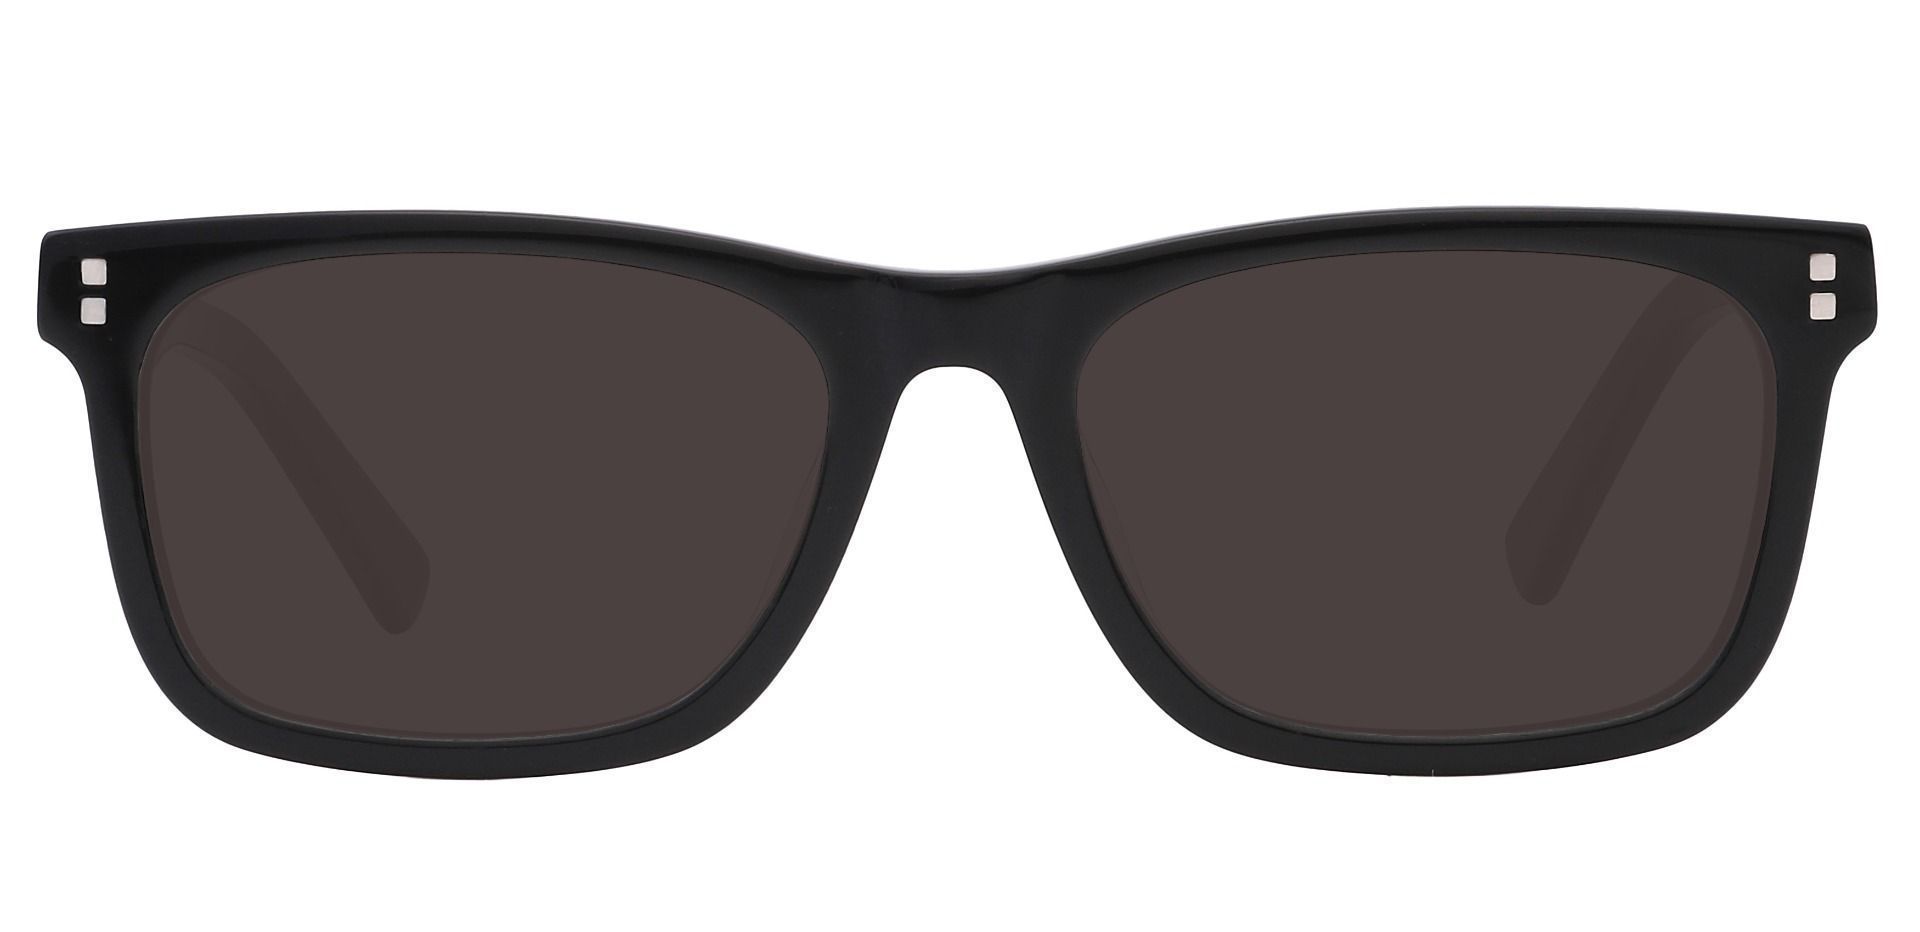 Liberty Rectangle Progressive Sunglasses - Black Frame With Gray Lenses